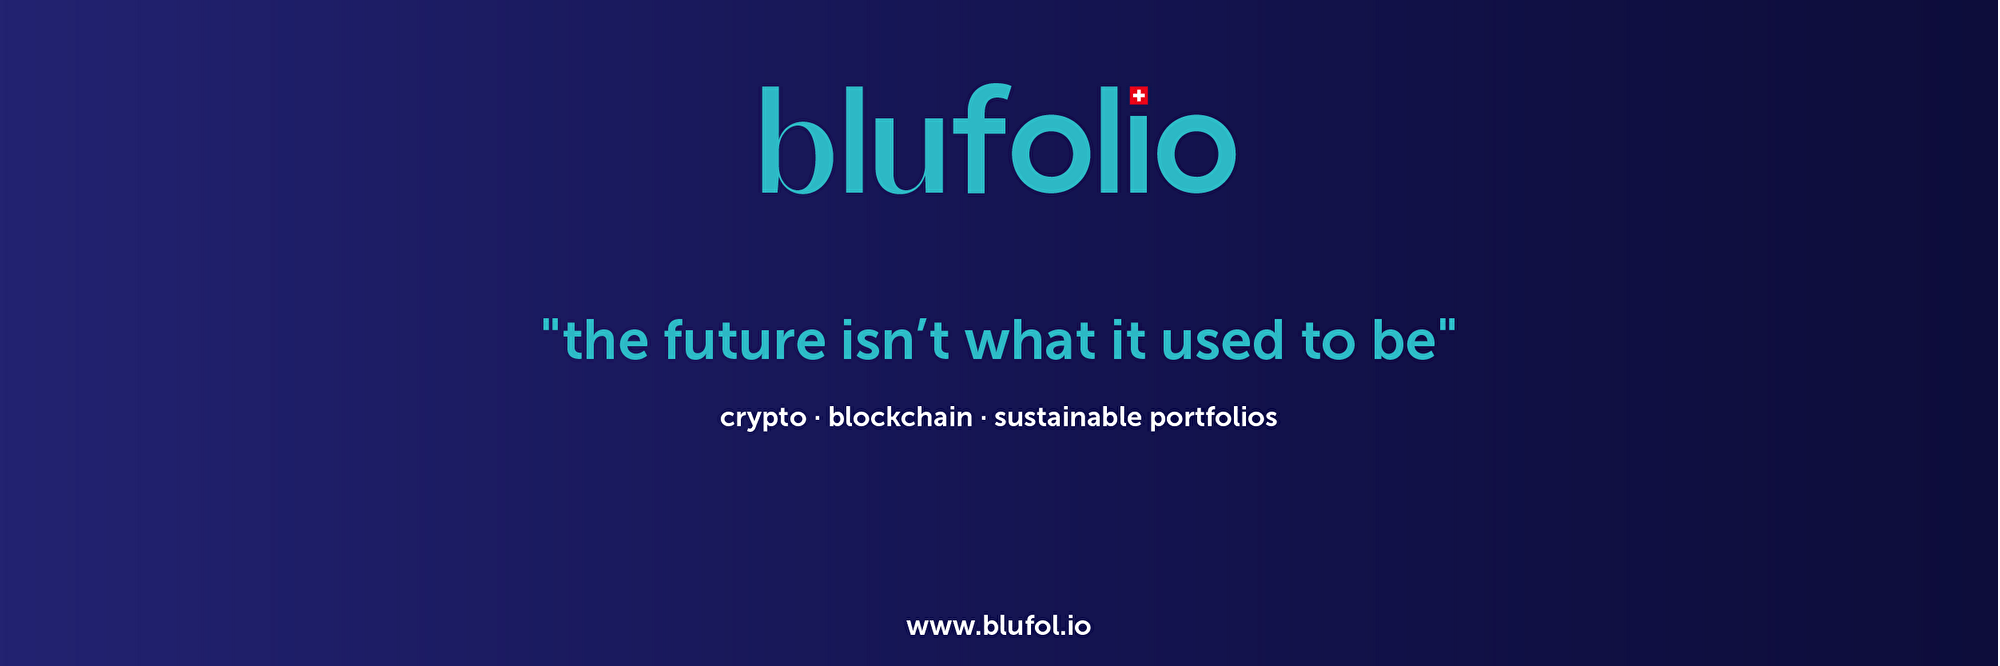 Blufolio sustainable crypto fund